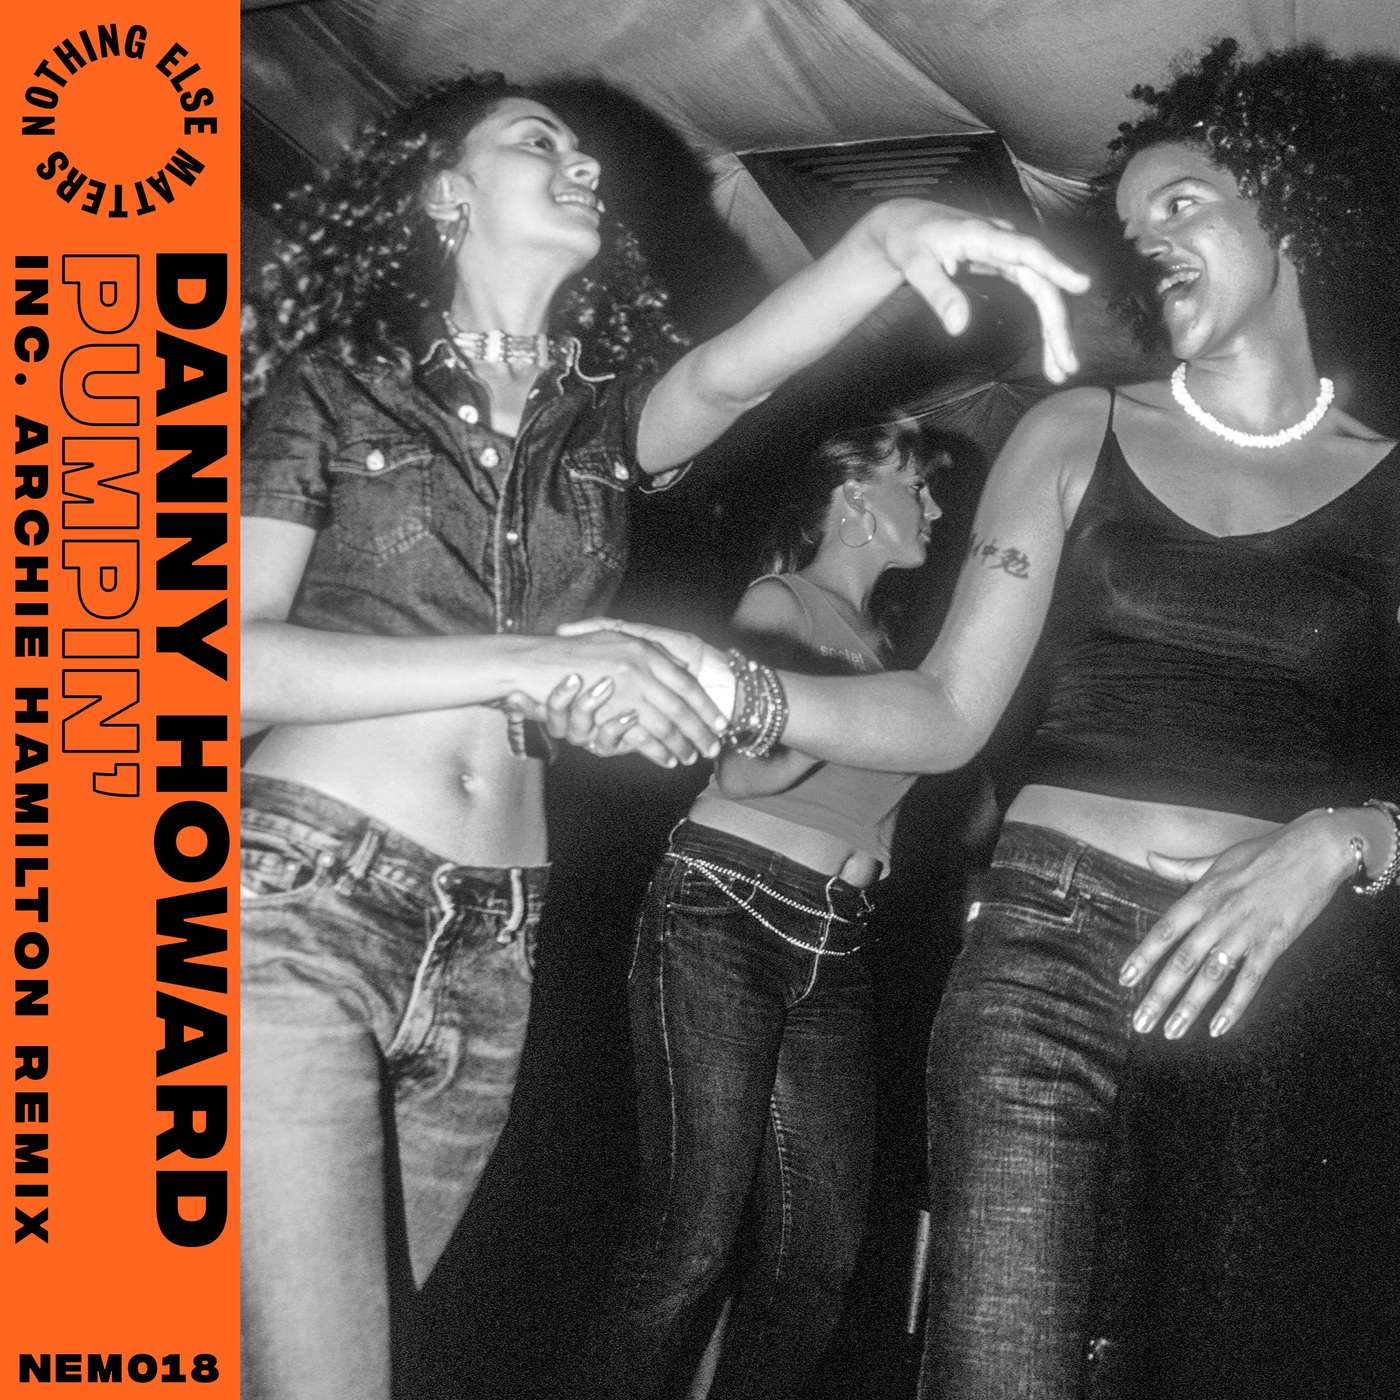 Download Pumpin’ (Inc. Archie Hamilton Remix) on Electrobuzz